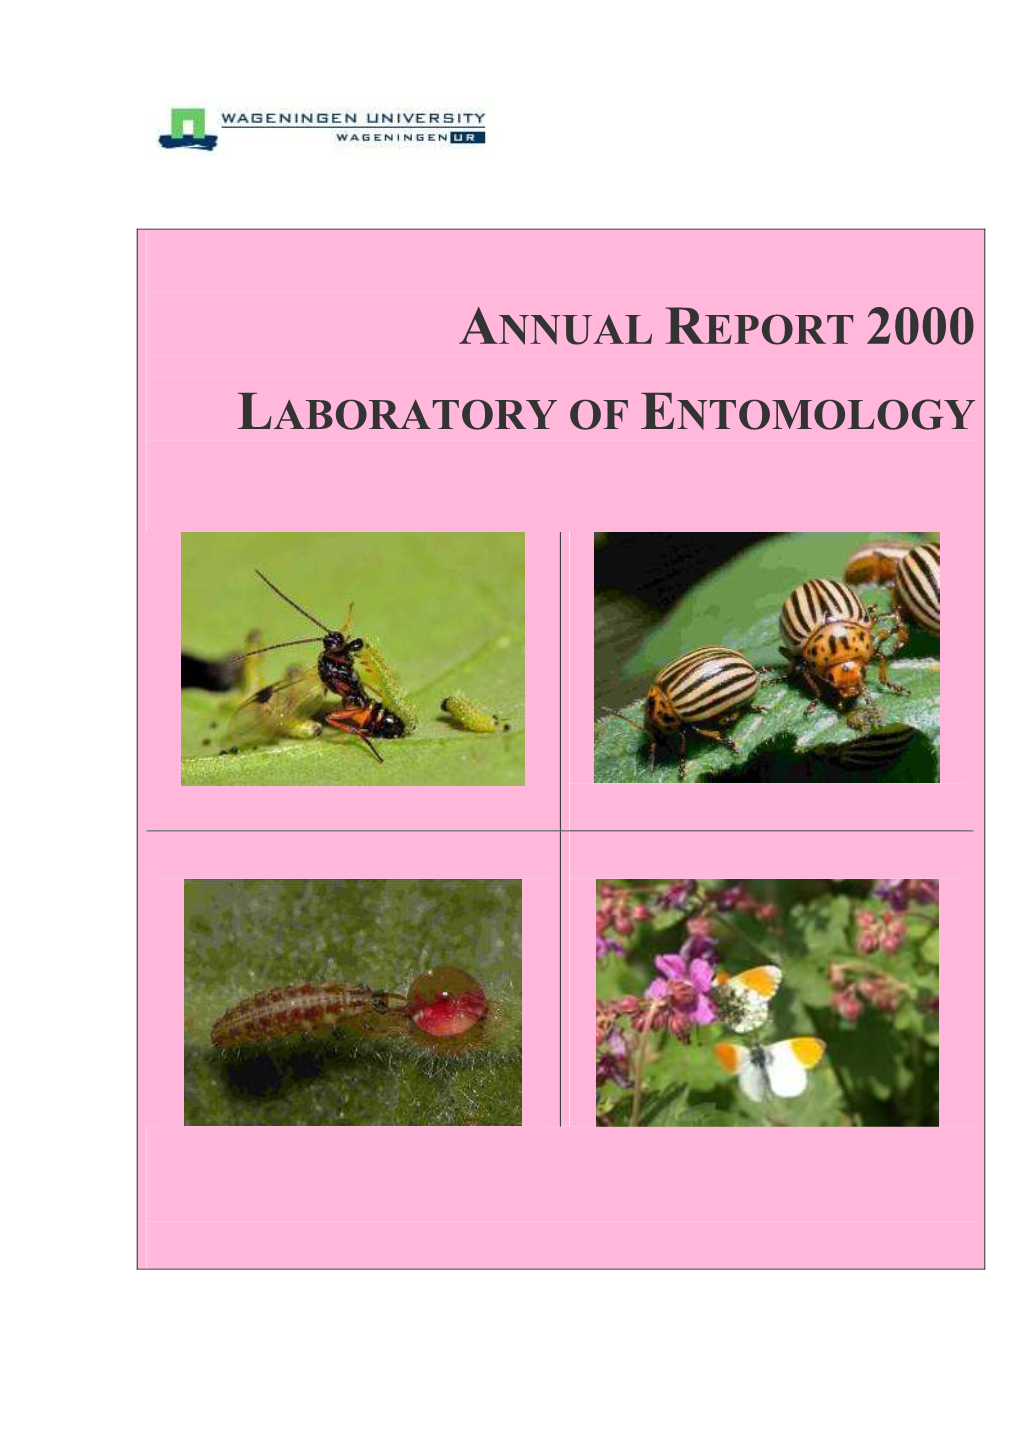 Annual Report 2000 Laboratory of Entomology